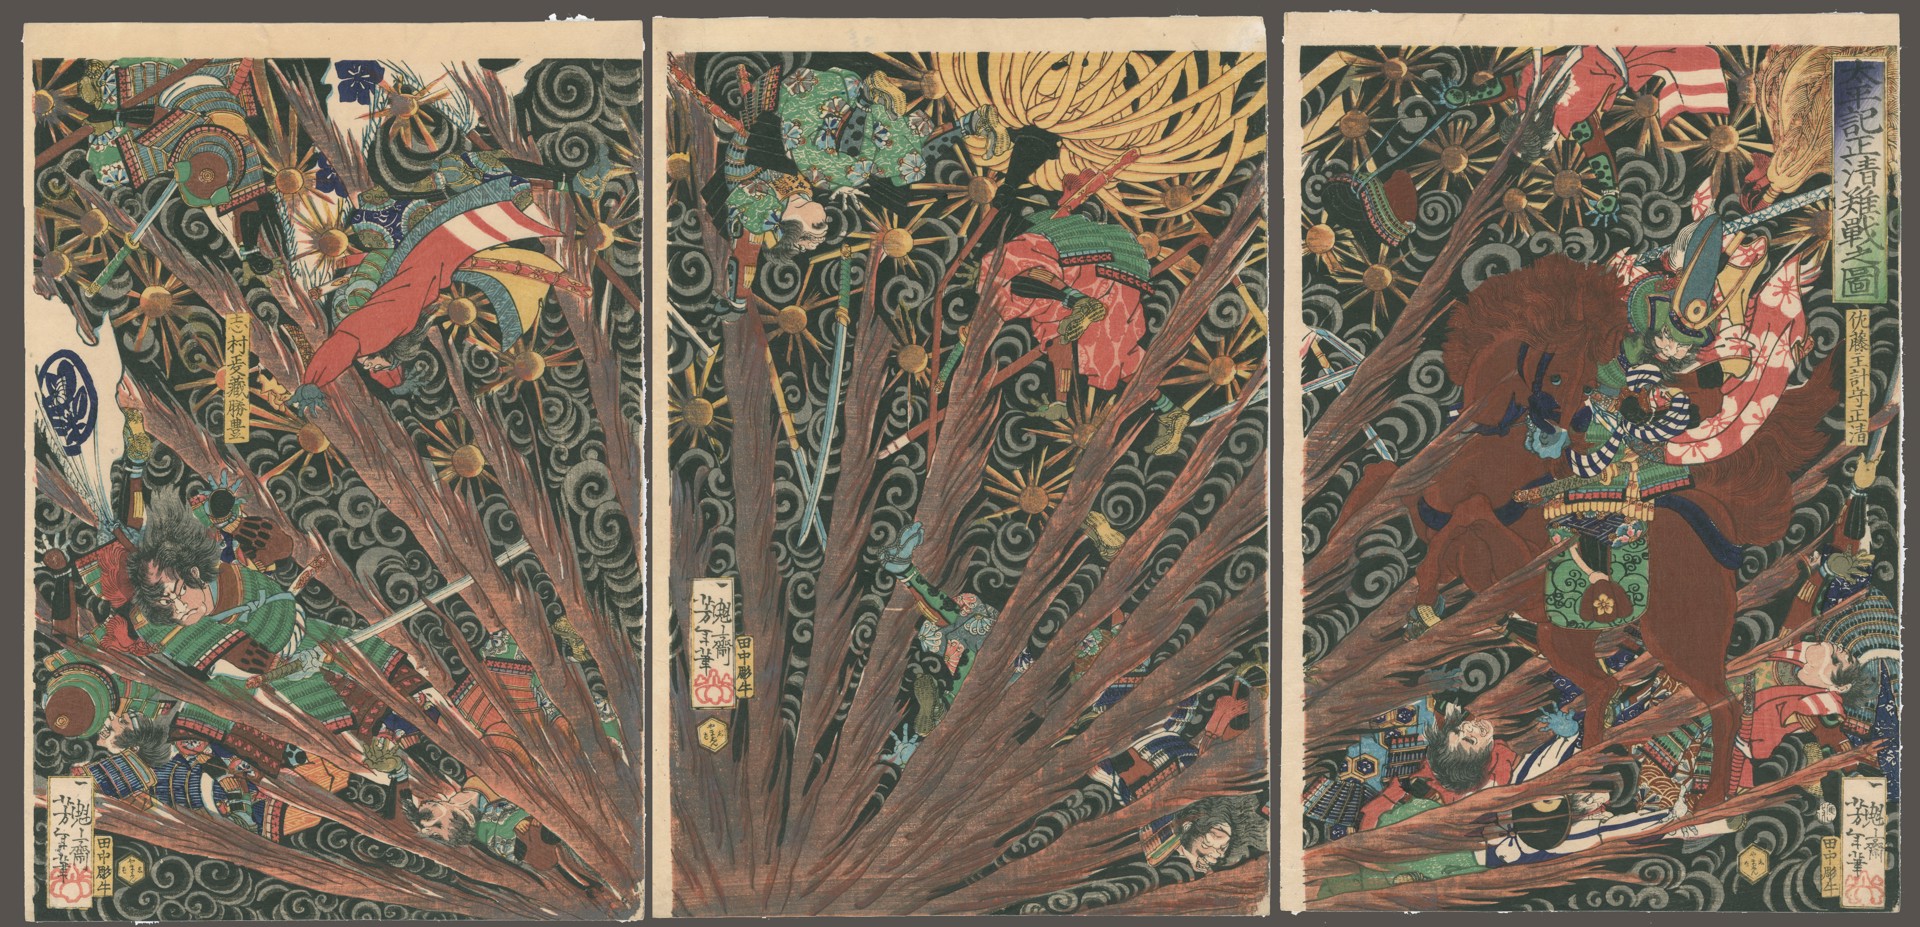 Masakiyo's Difficult Battle from the Taiheiki by Yoshitoshi